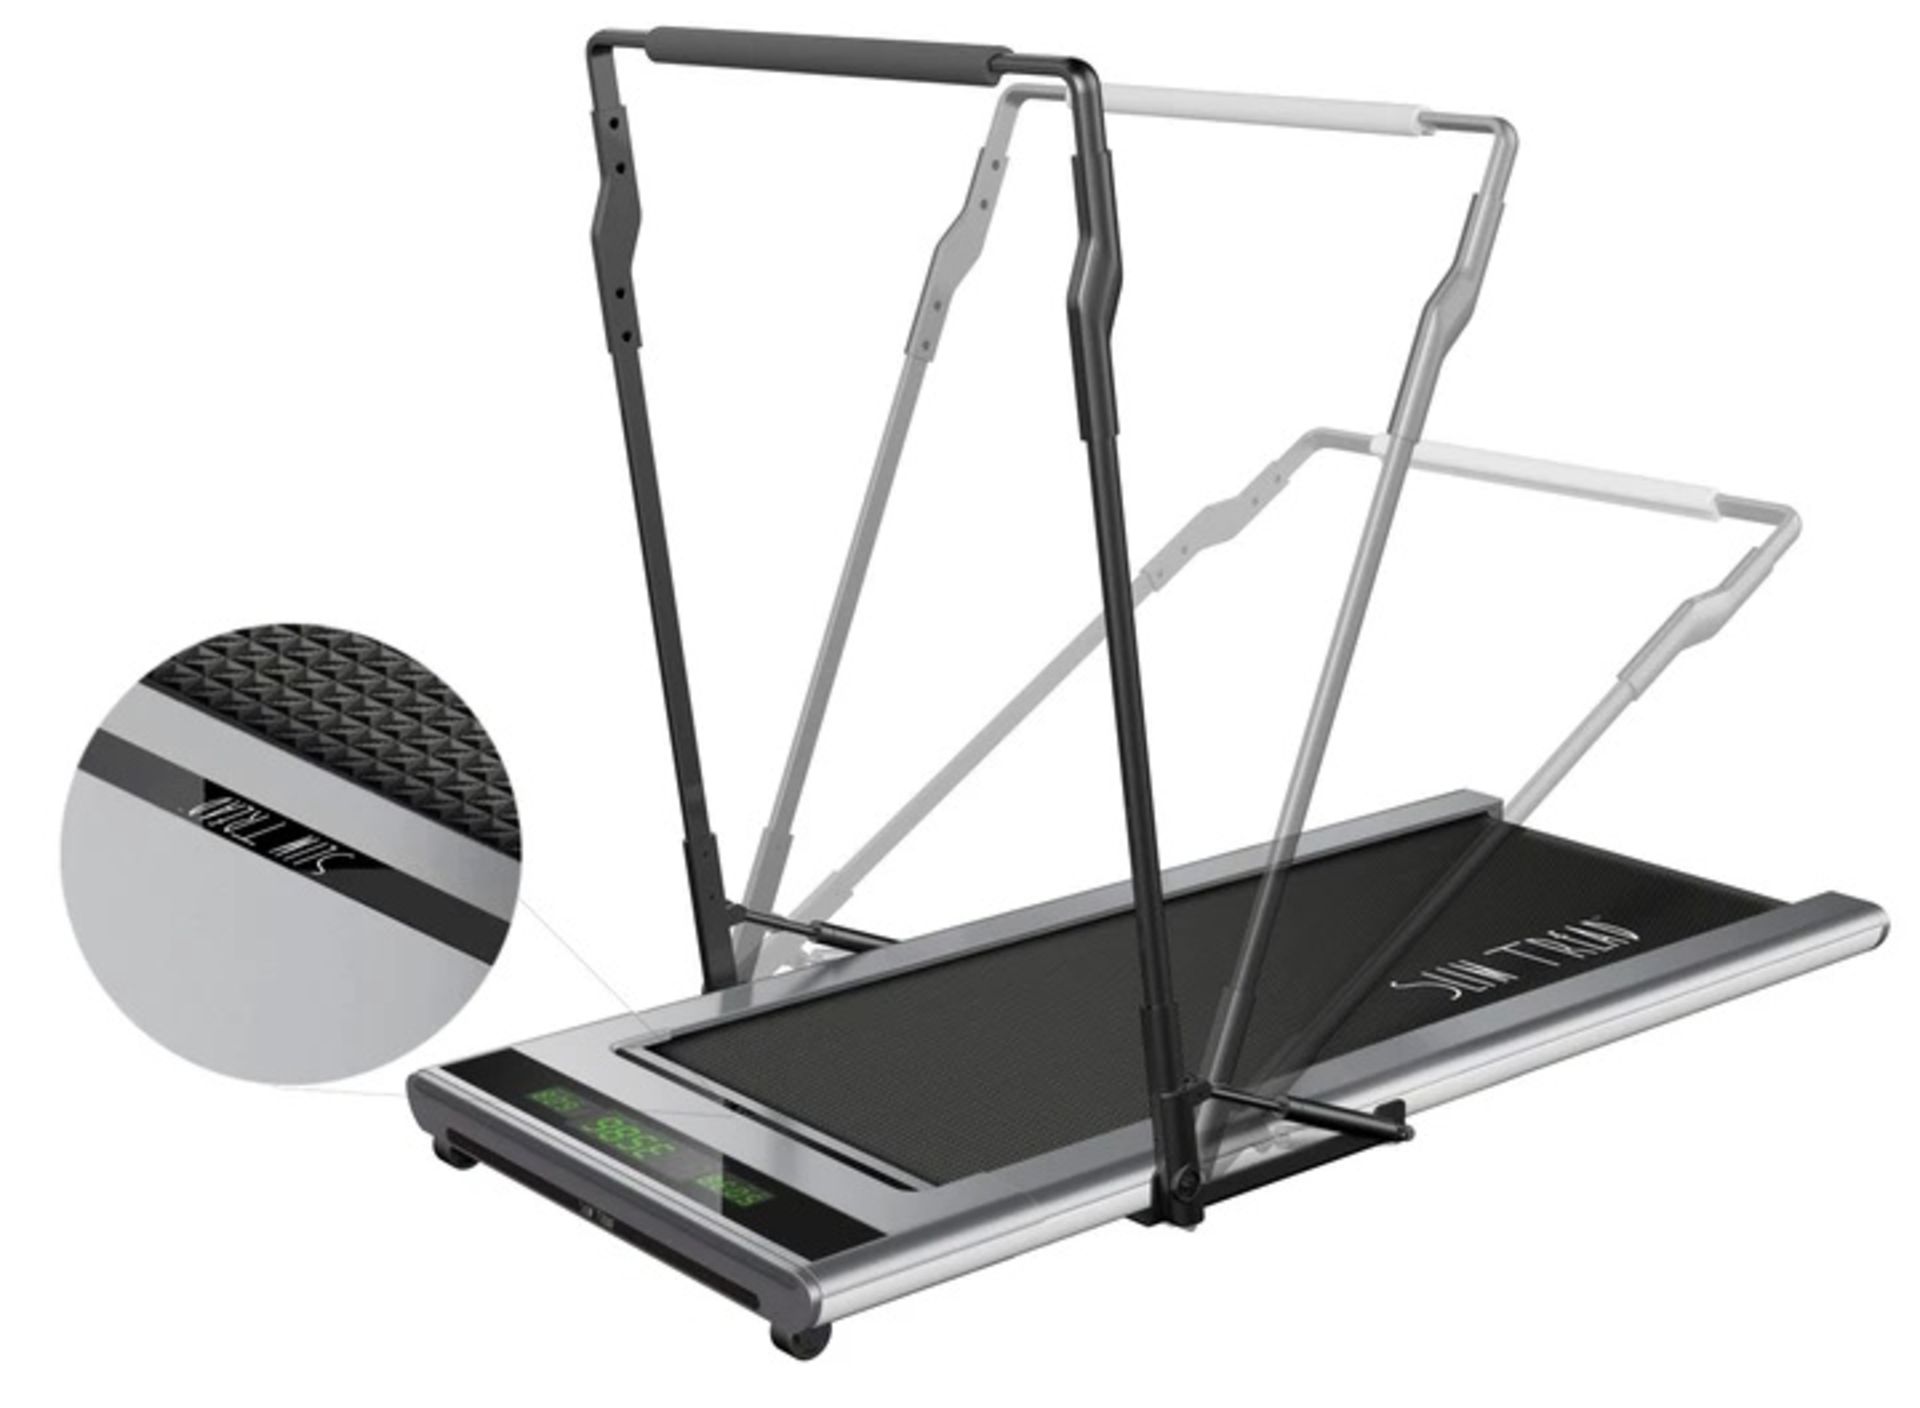 10 x Slim Tread Ultra Thin Smart Treadmill Running Machine - Brand New Sealed Stock - RRP £799 Each! - Image 12 of 24